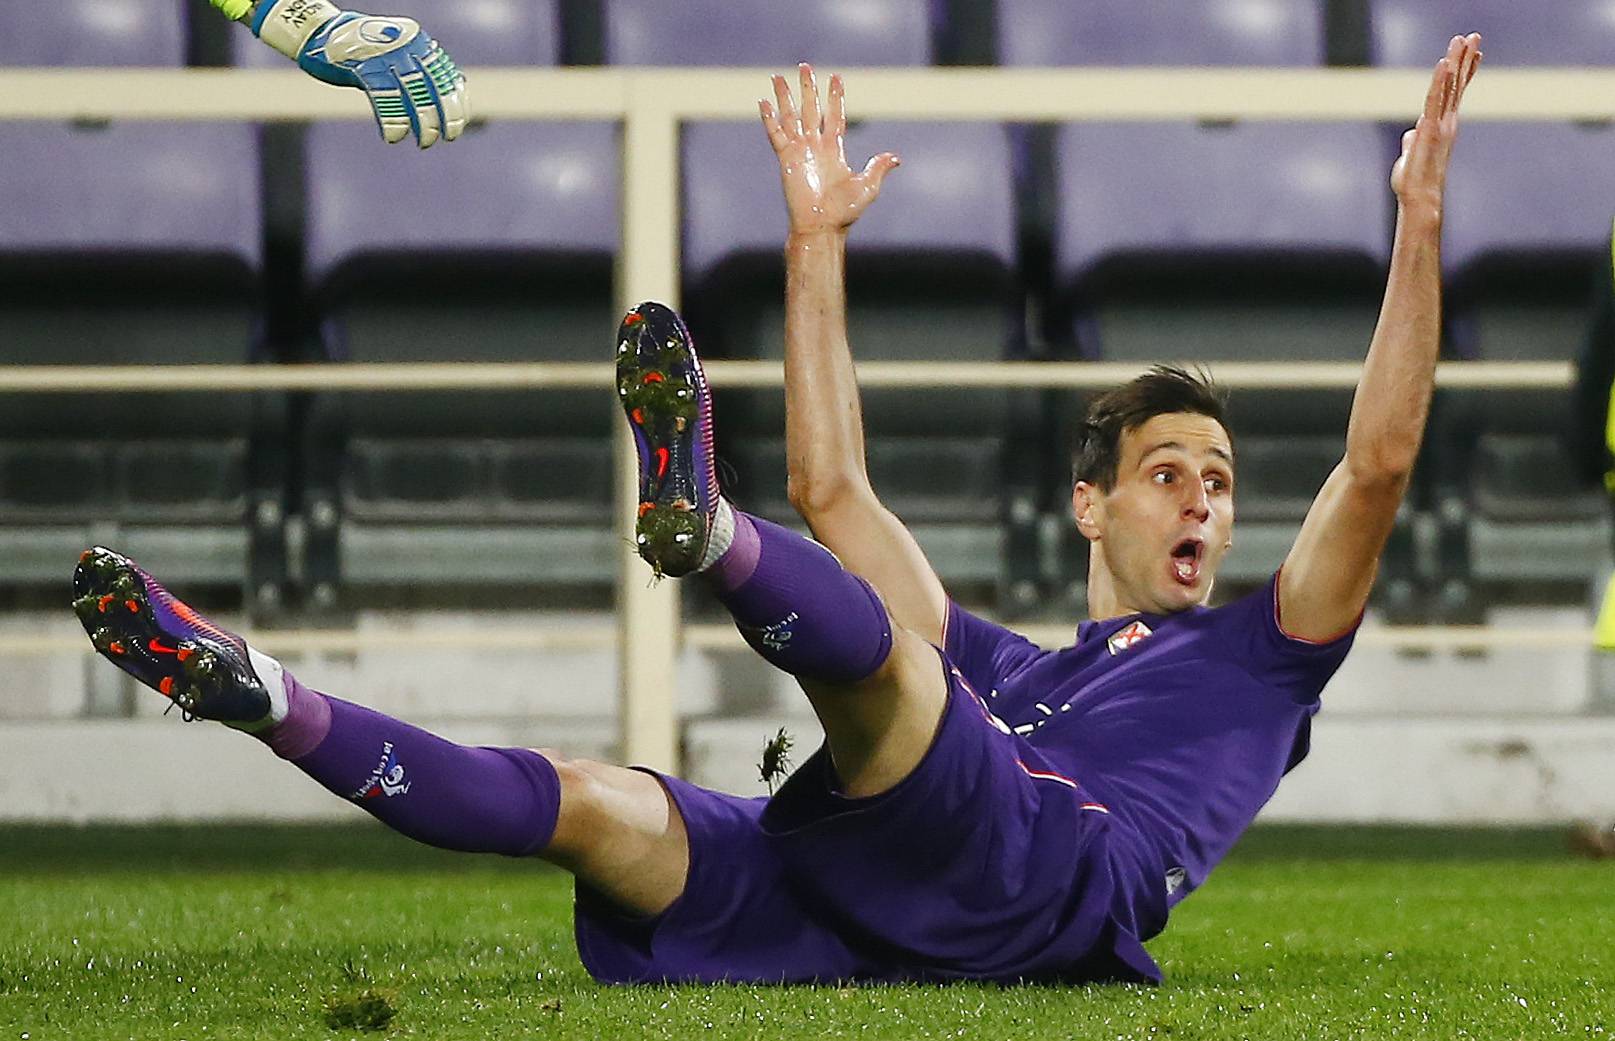 Fiorentina's Nikola Kalinic reacts